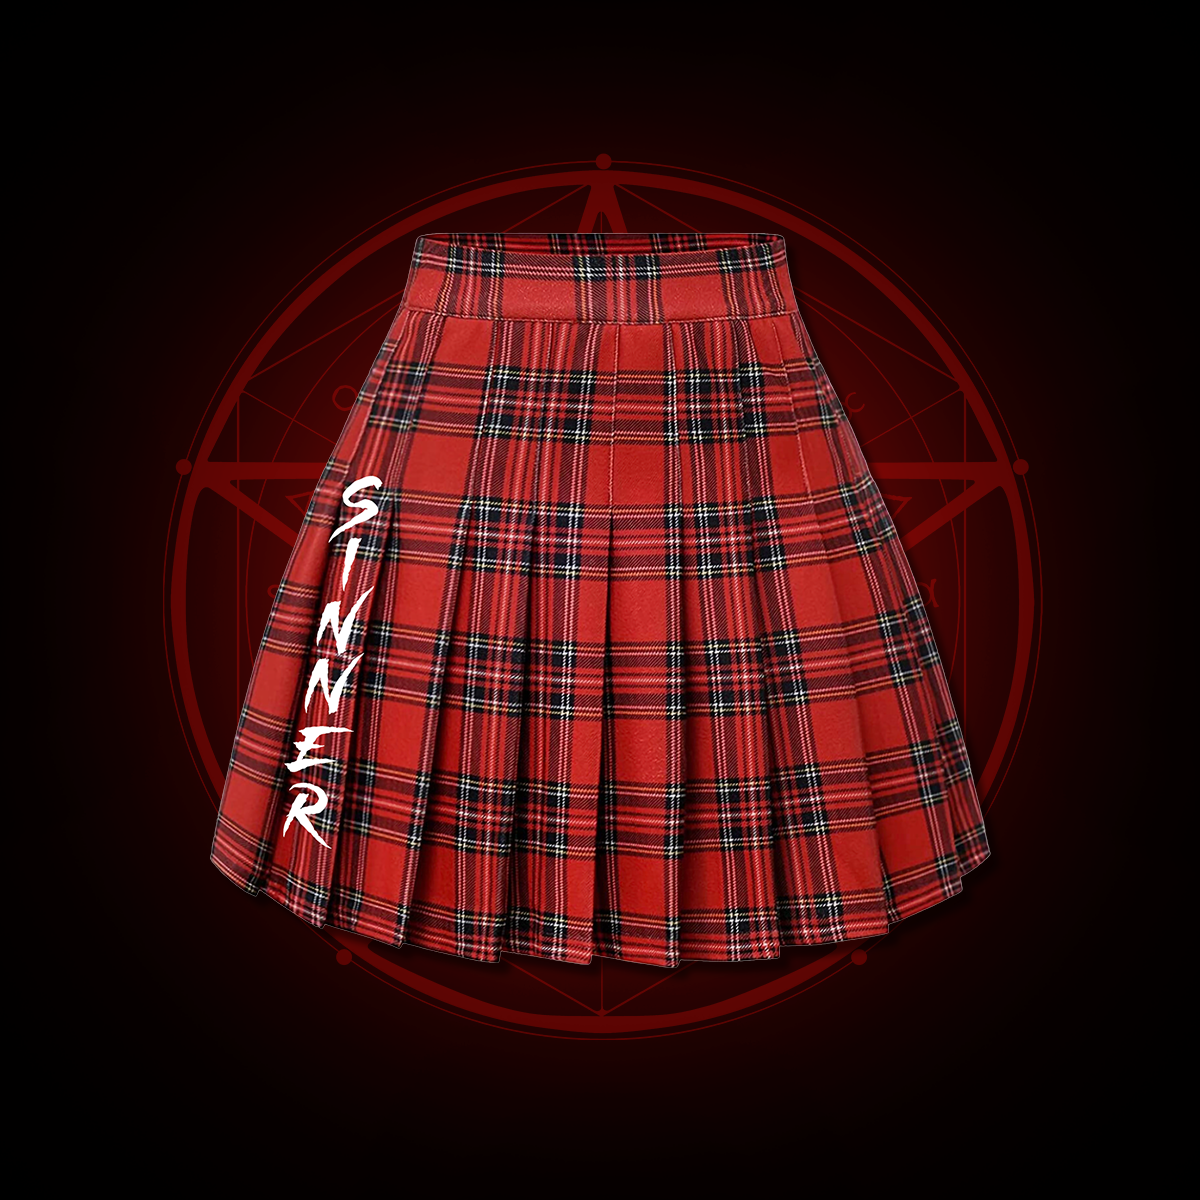 Sinner Plaid Skirt